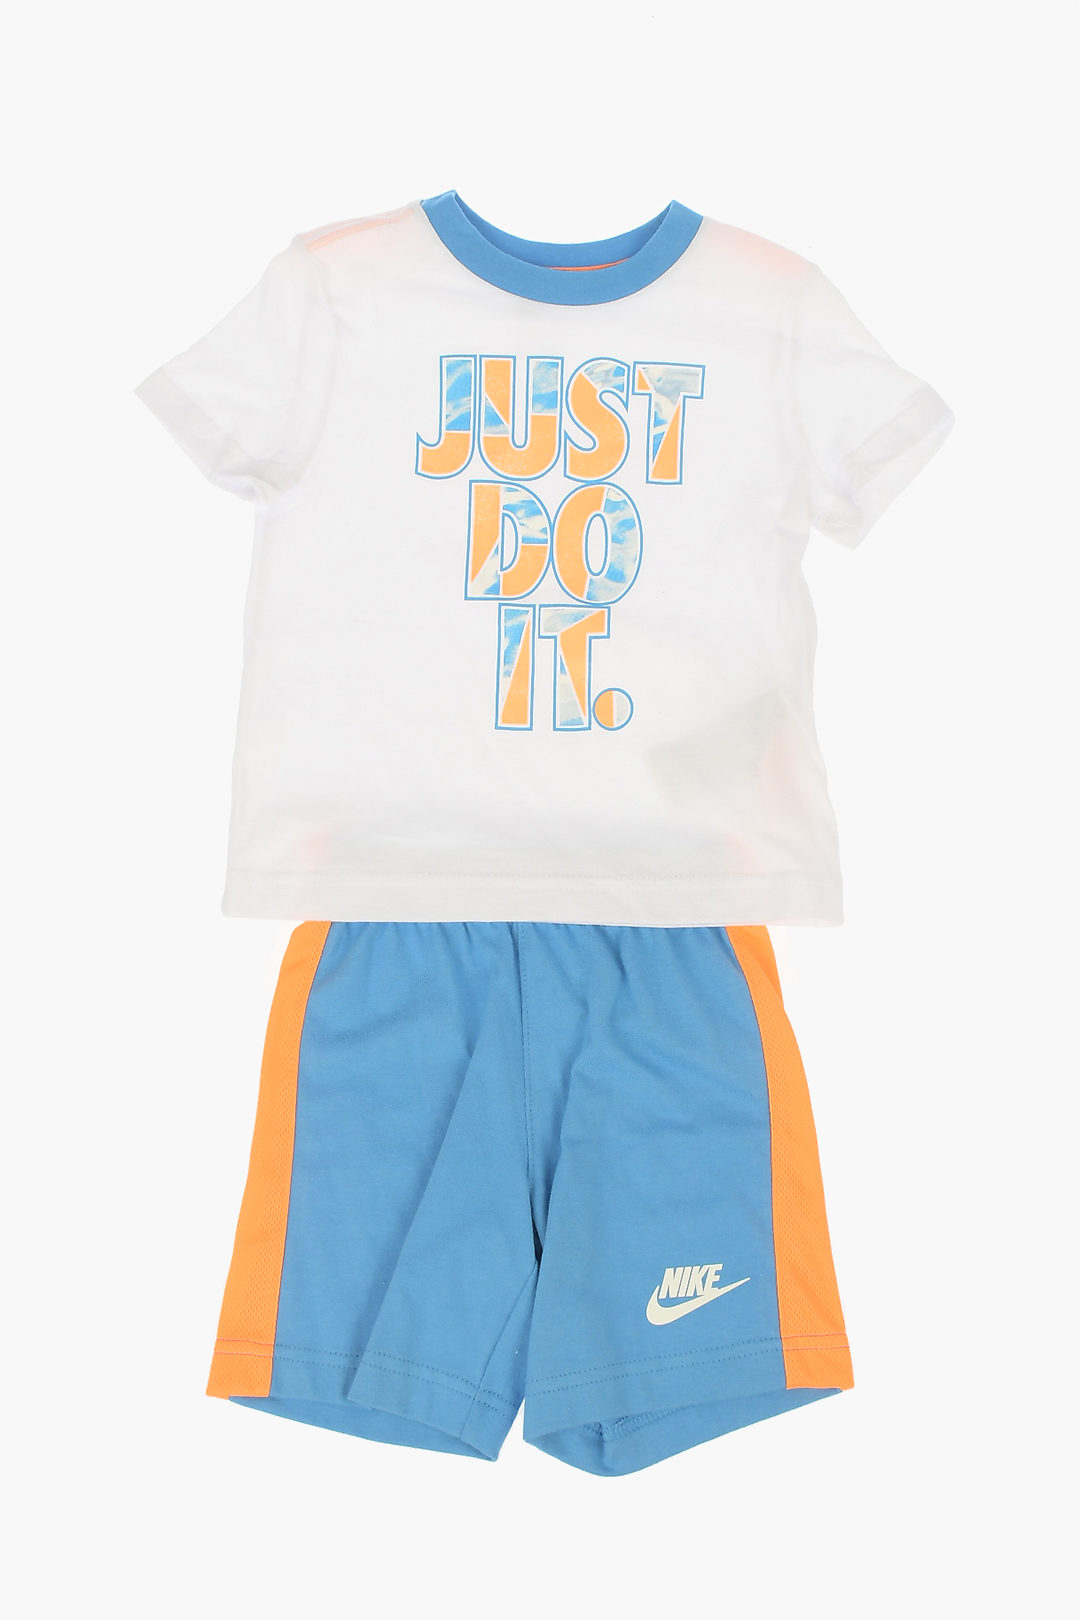 Nike KIDS T-shirt and Shorts Set boys - Glamood Outlet